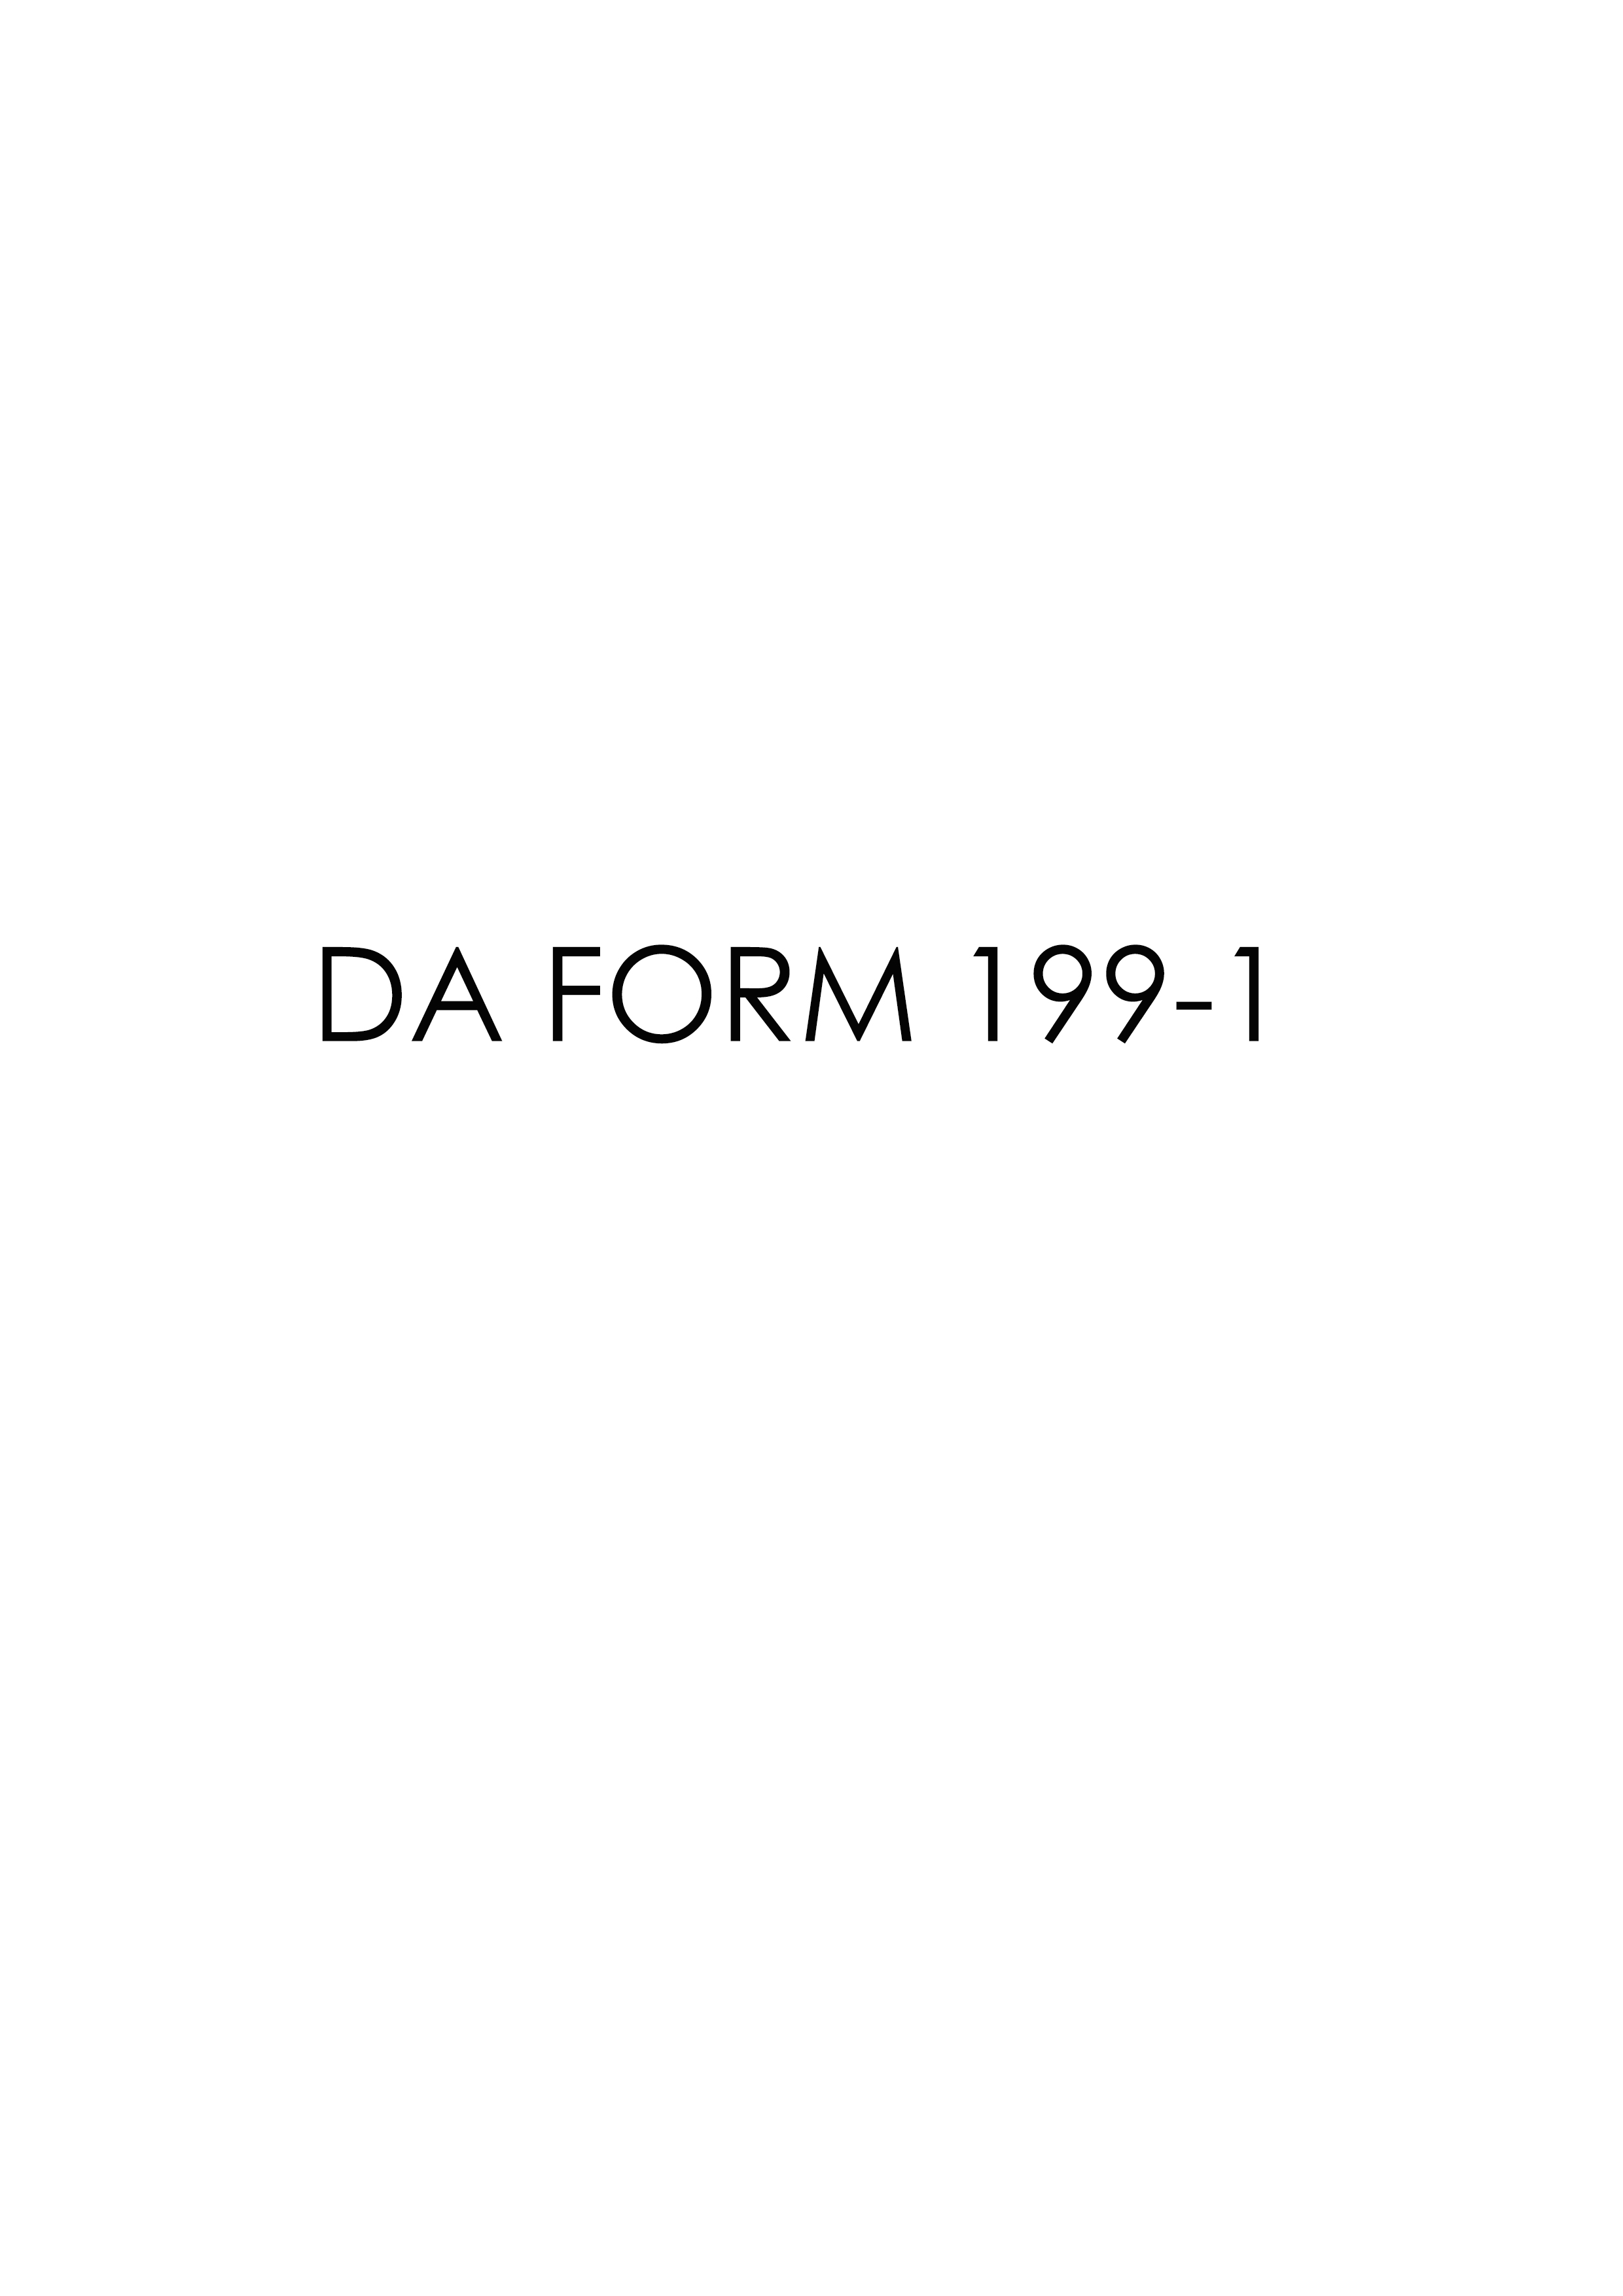 Download da 199-1 Form